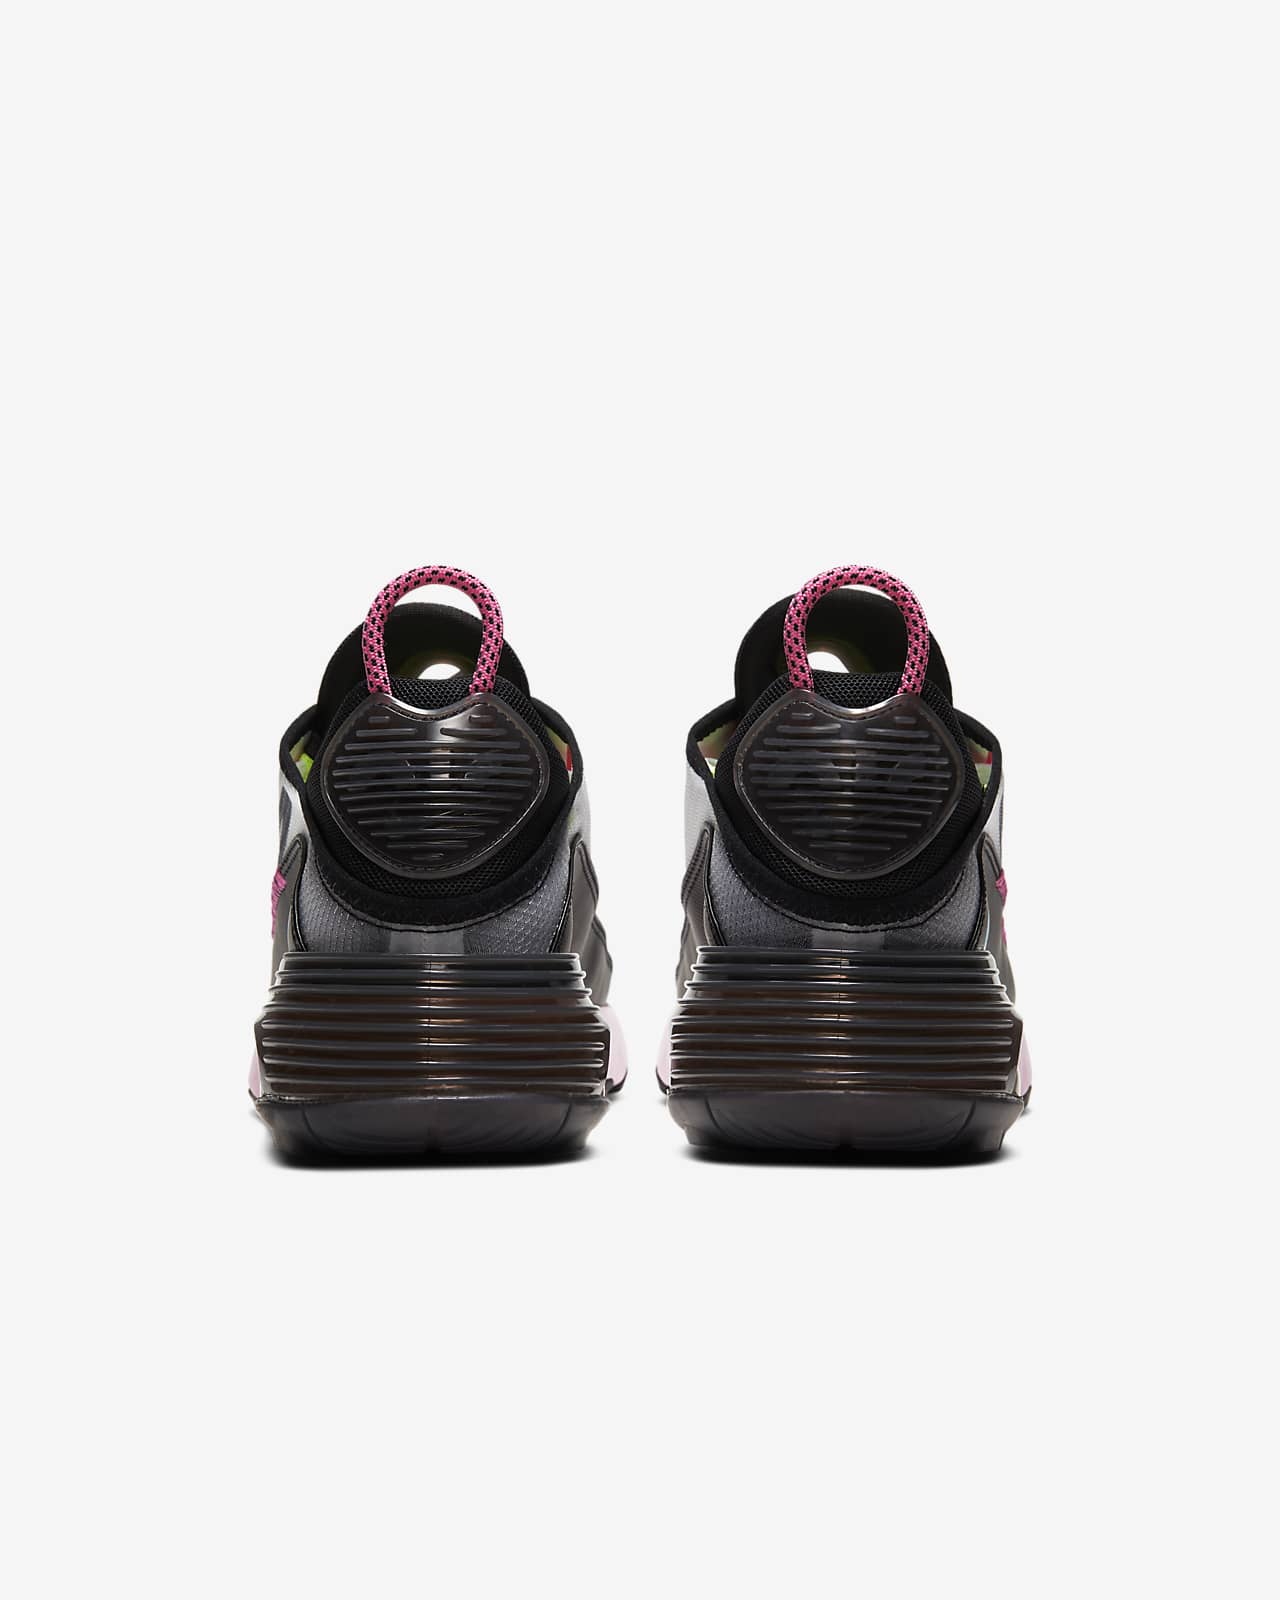 air max 2090 og sneaker in black & pink